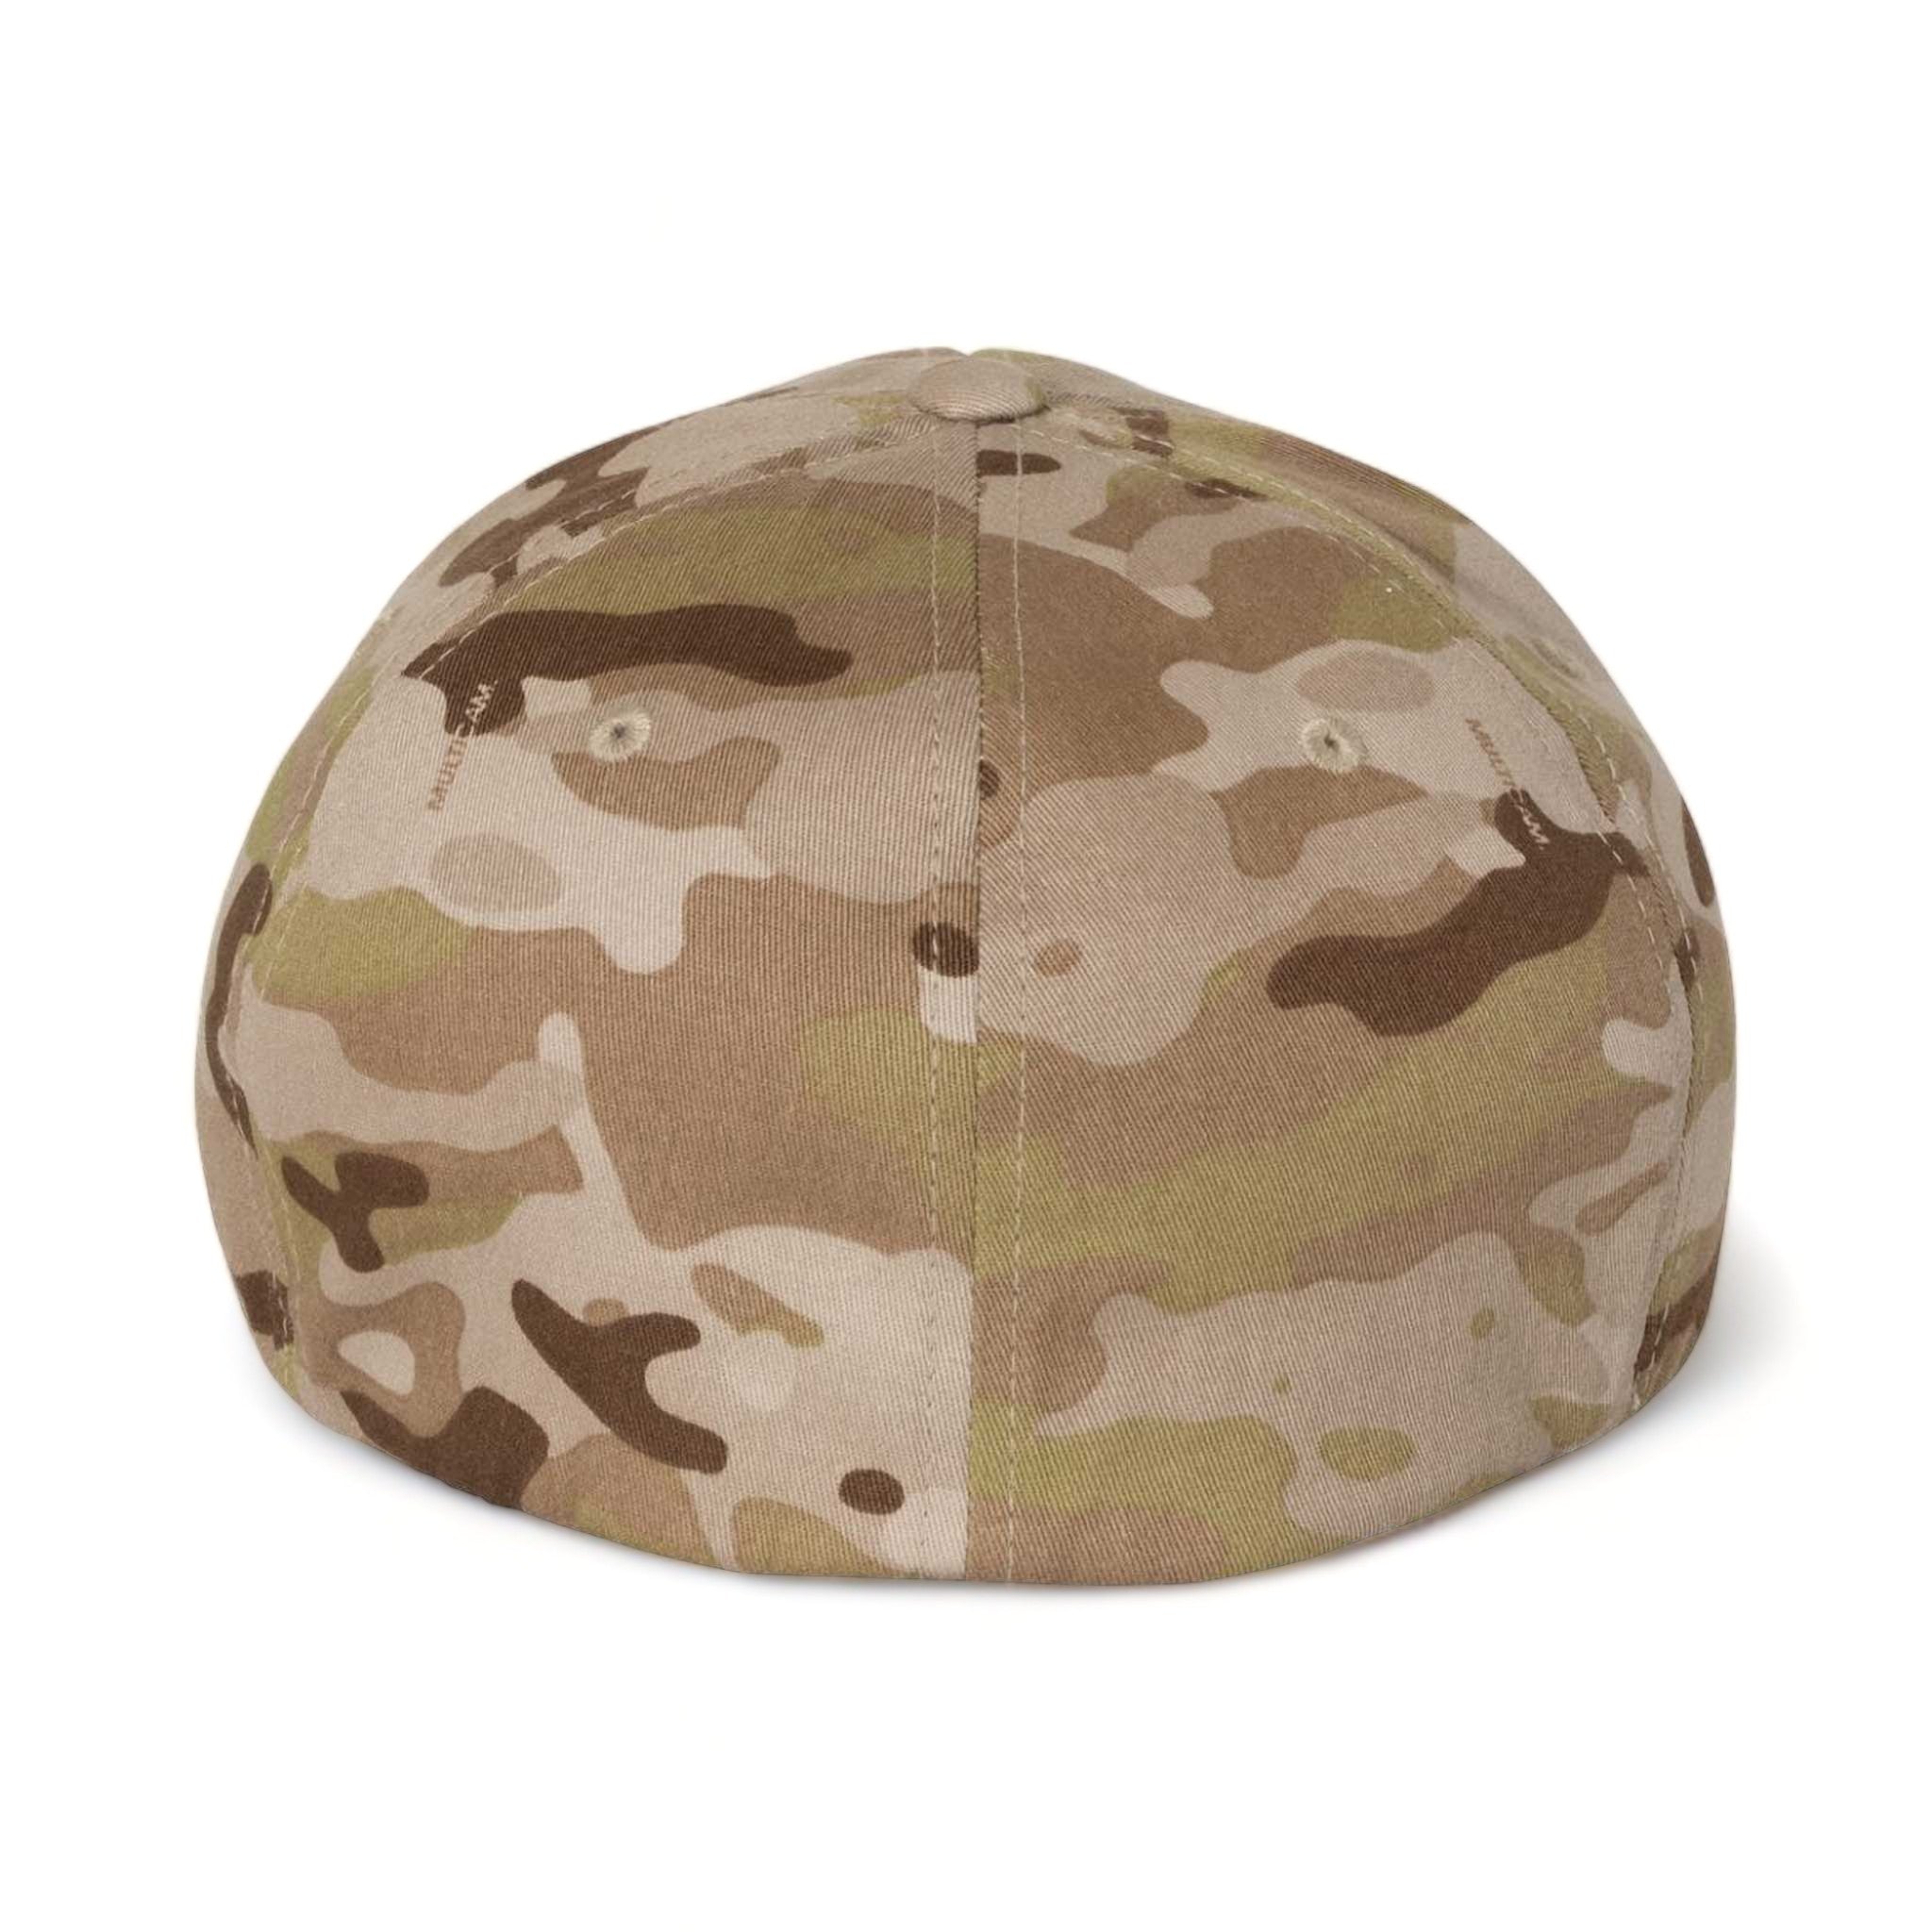 Back view of Flexfit 6277 custom hat in multicam arid